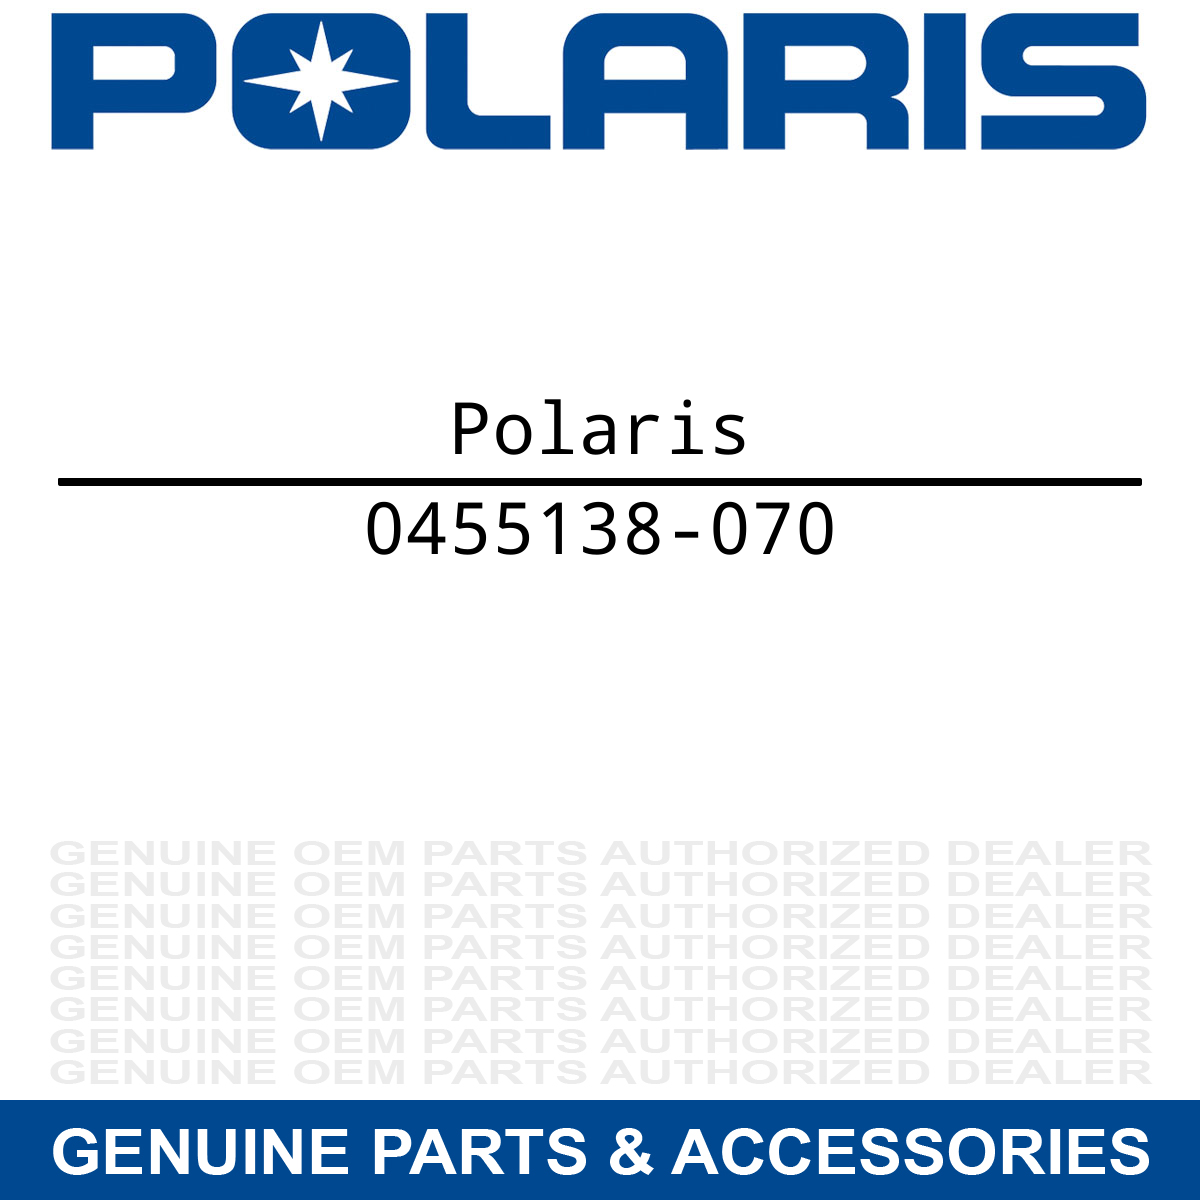 Polaris 0455138-070 Covers Outlaw 110